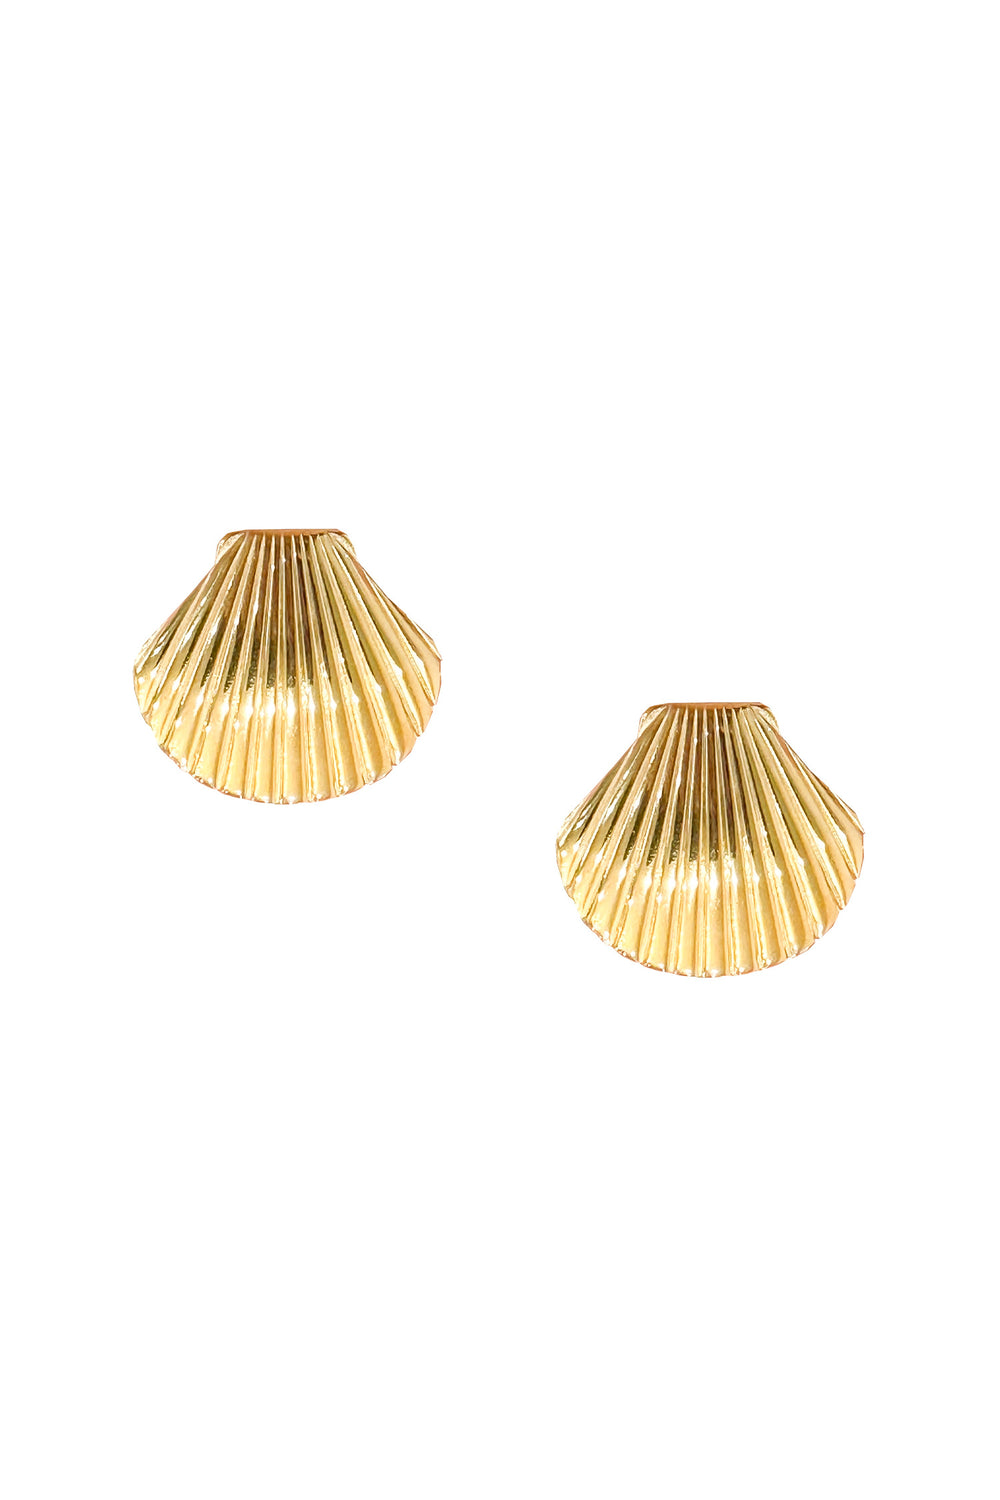 Maurita Gold Shell Earrings